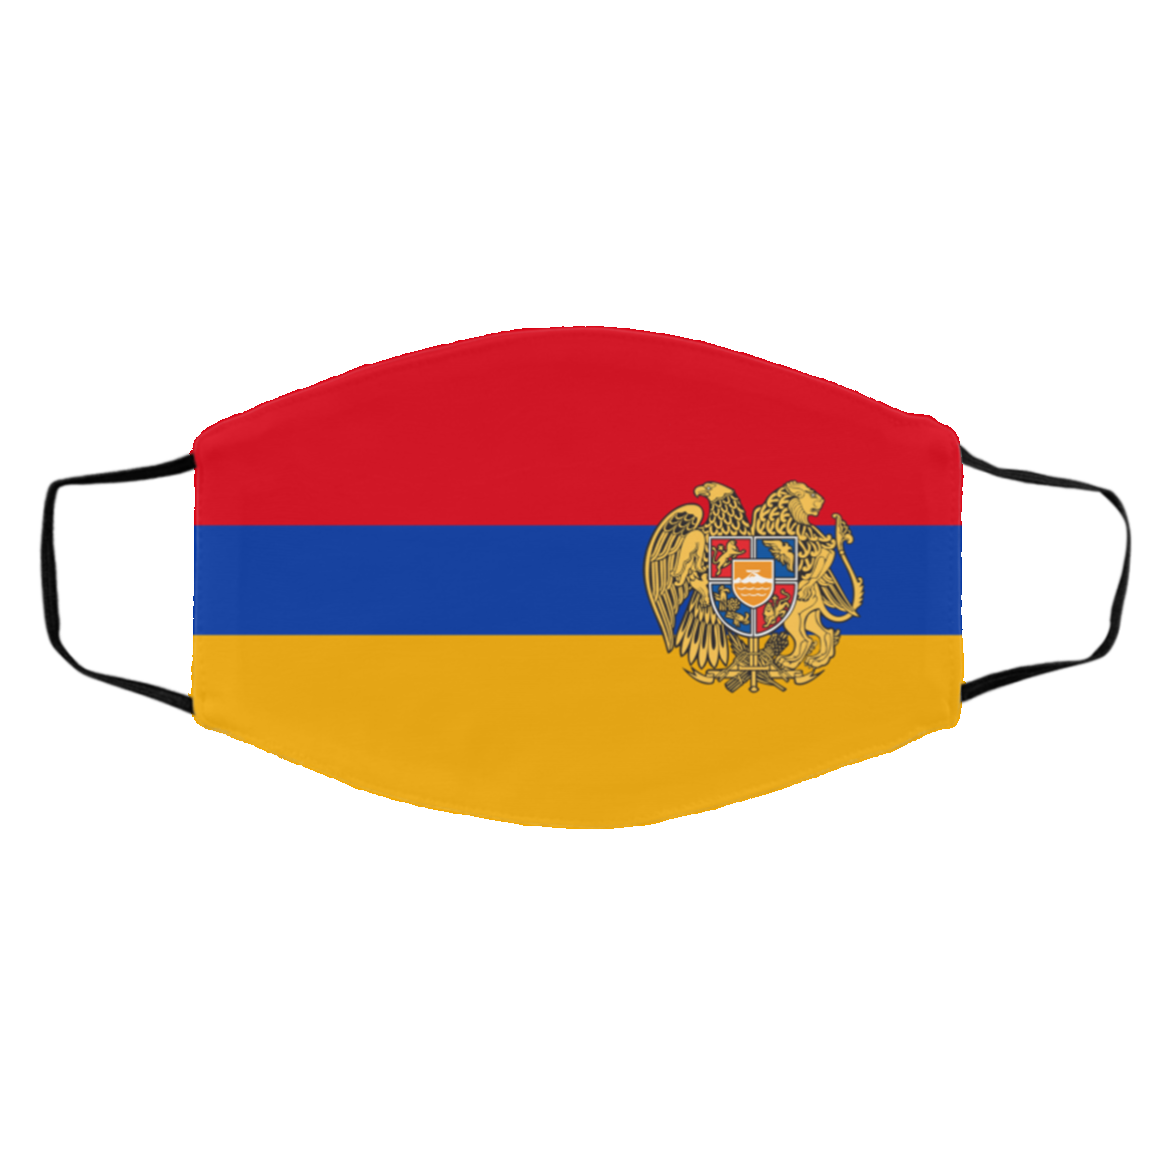 Armenia Flag Download PNG Image